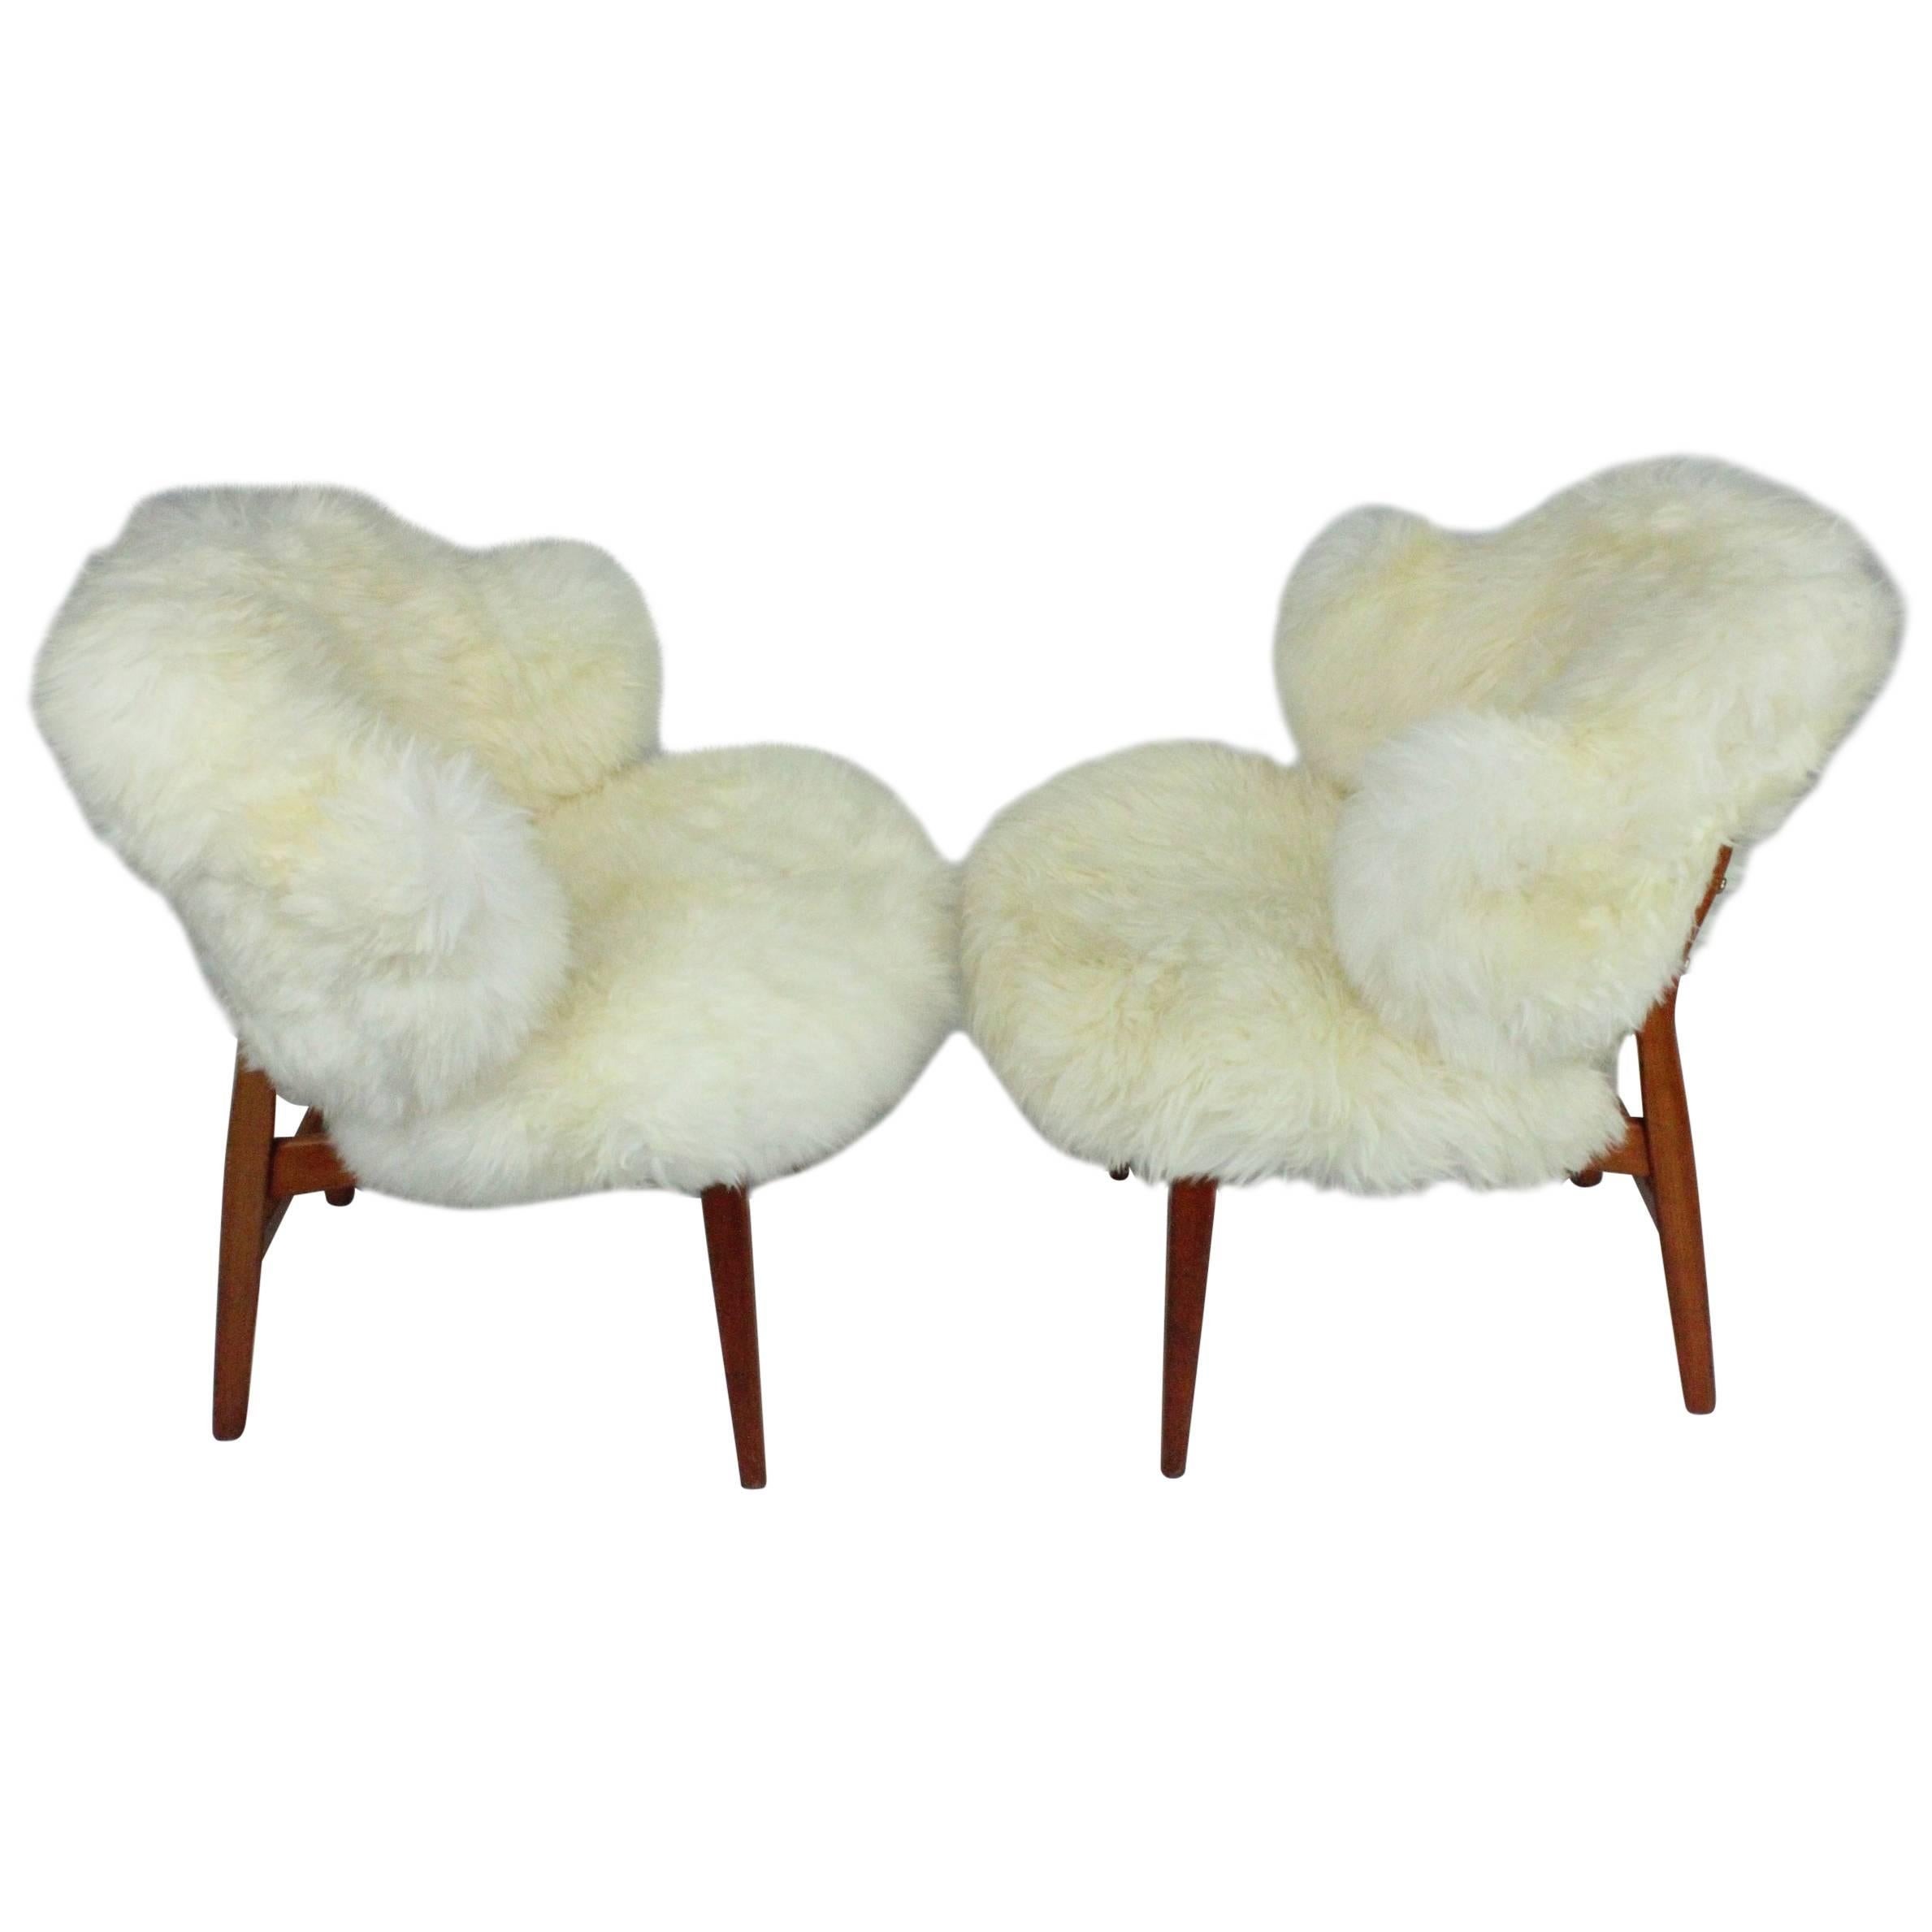 Pair of Ib Kofod-Larsen Shell Chairs Dressed in Swedish Long Haired Sheepskin